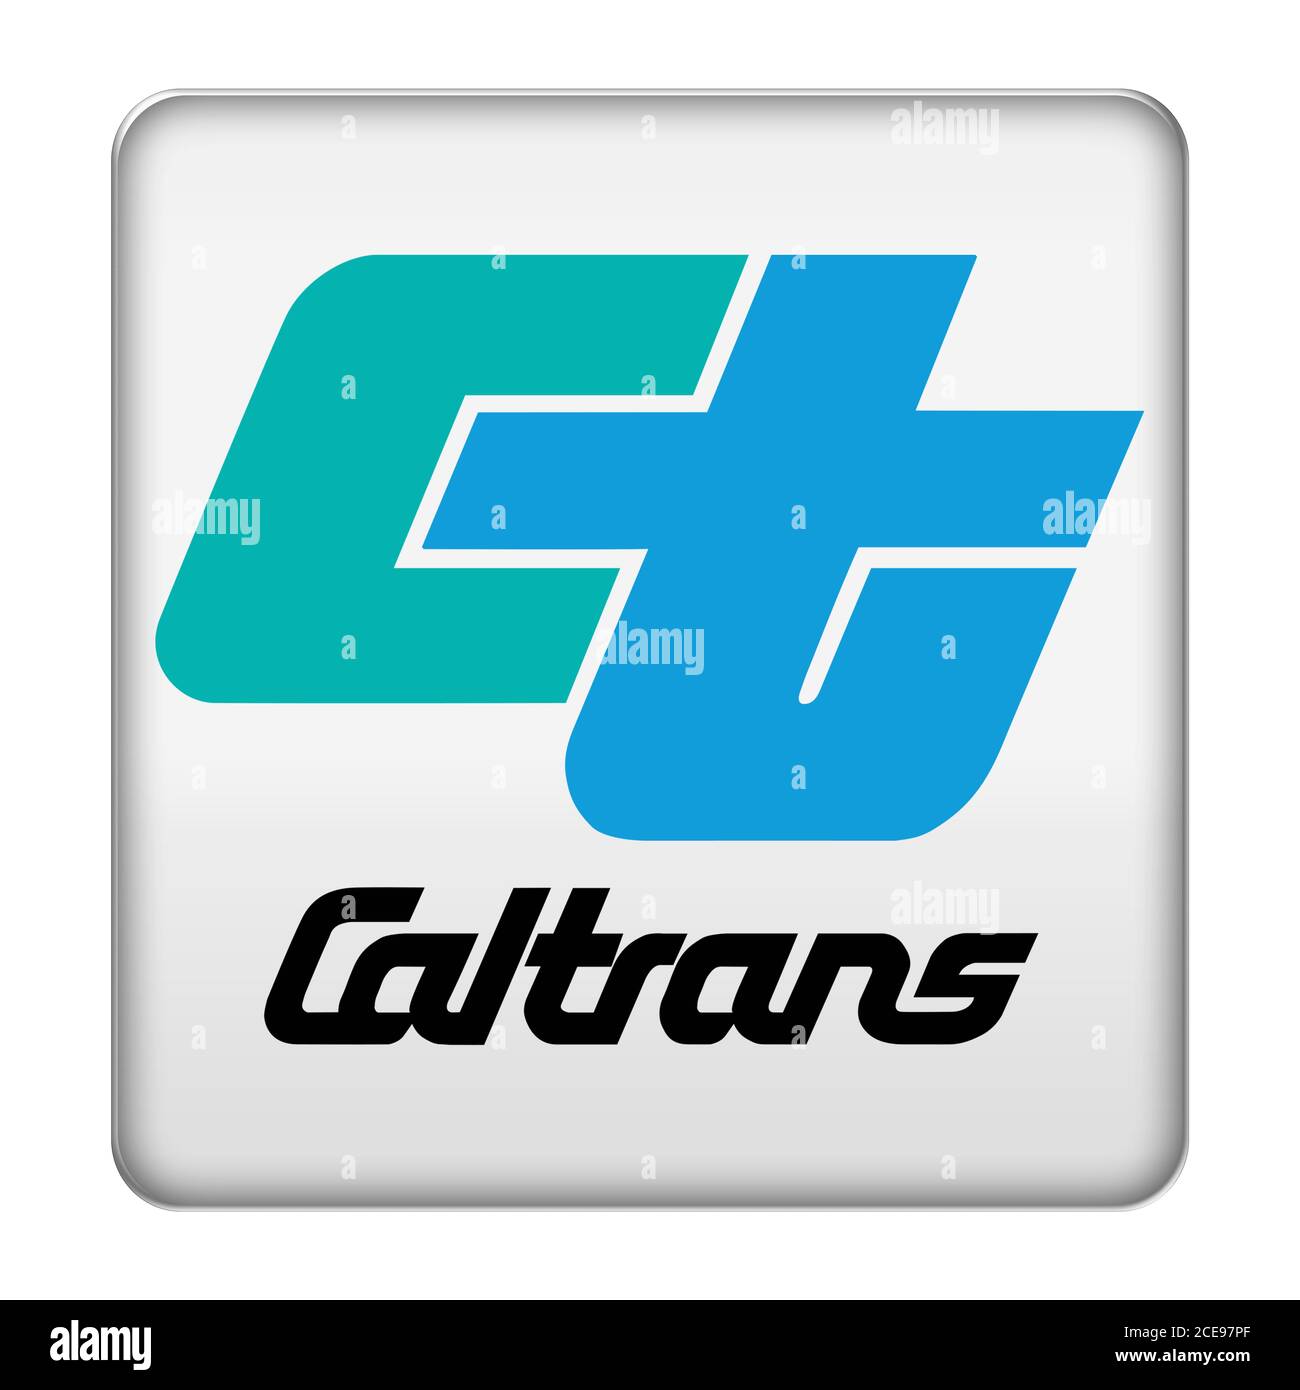 California Department of Transportation Caltrans Stock Photo